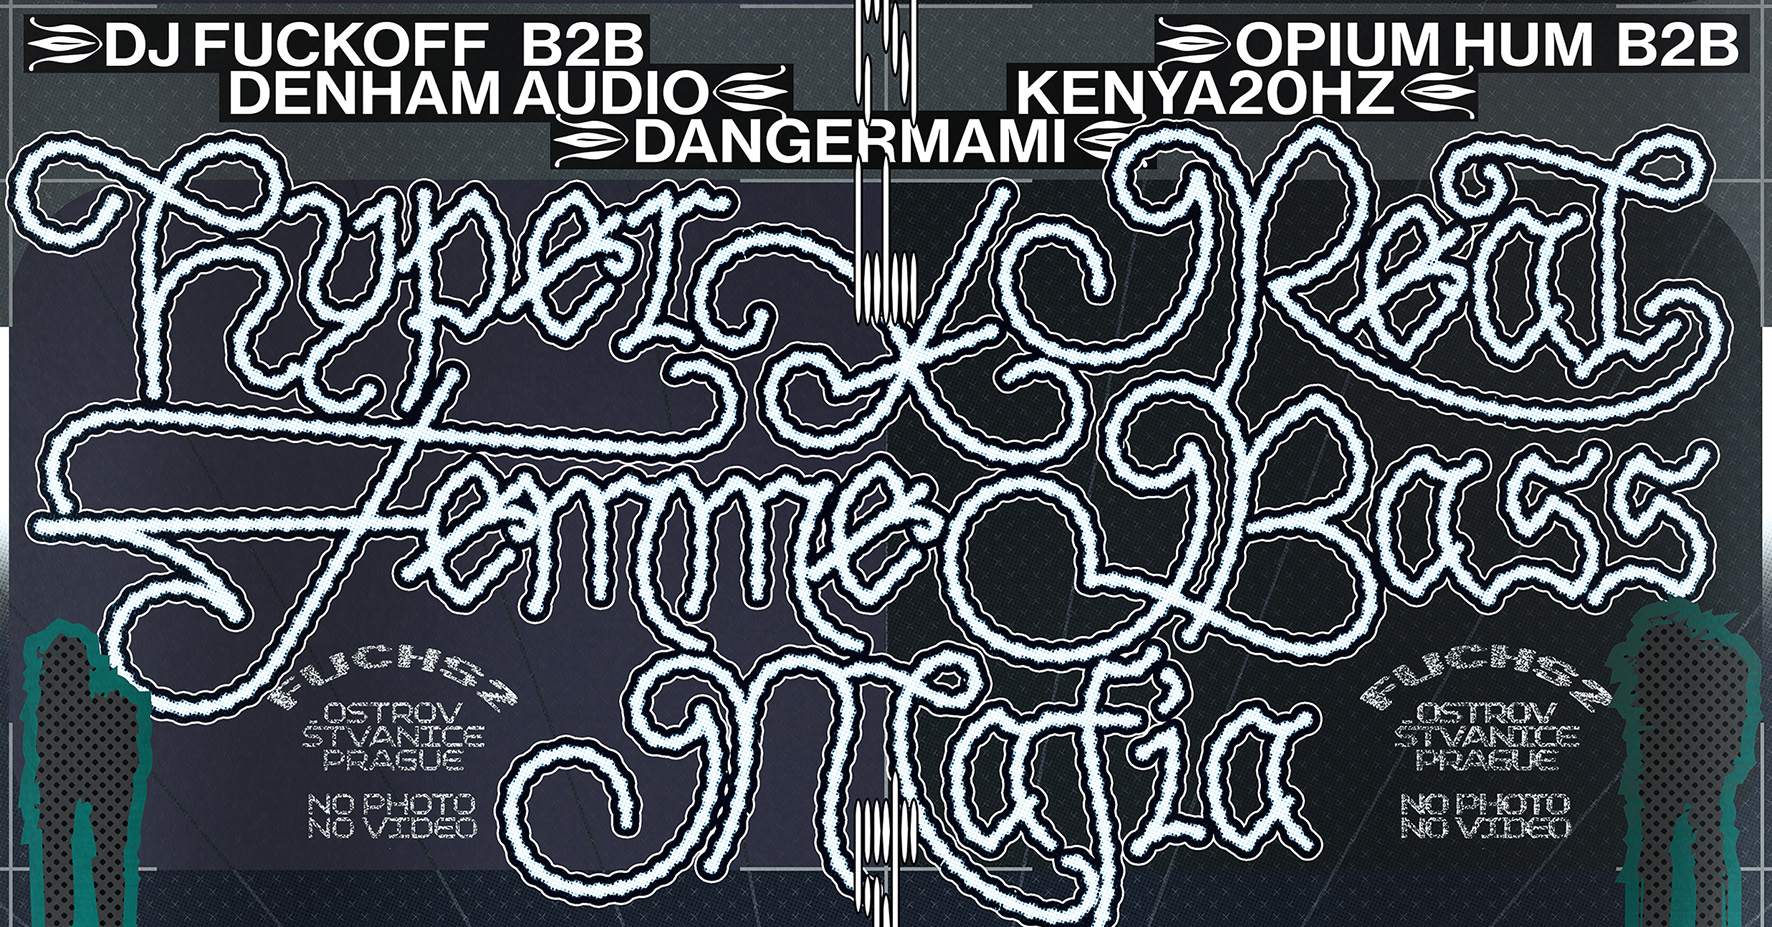 HYPER REAL x FEMME BASS MAFIA: DJ Fuckoff, Denham Audio, Dangermami, Opium Hum & KENYA20HZ - フライヤー裏